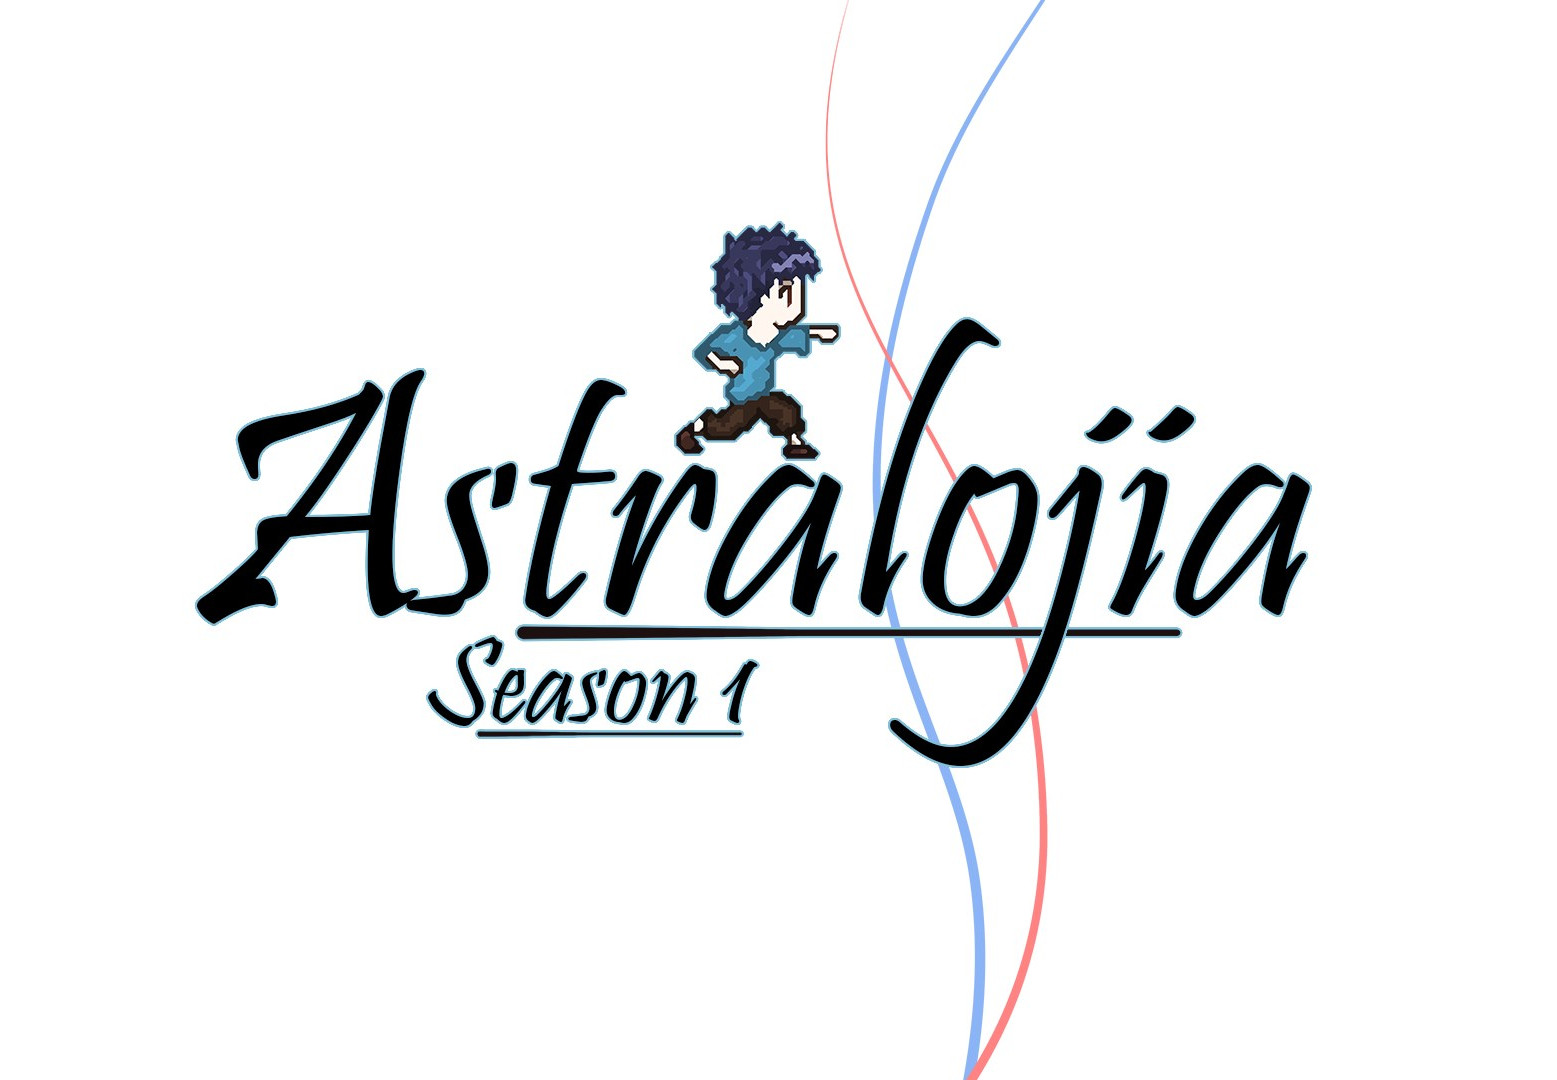 Astralojia: Season 1 Steam CD Key